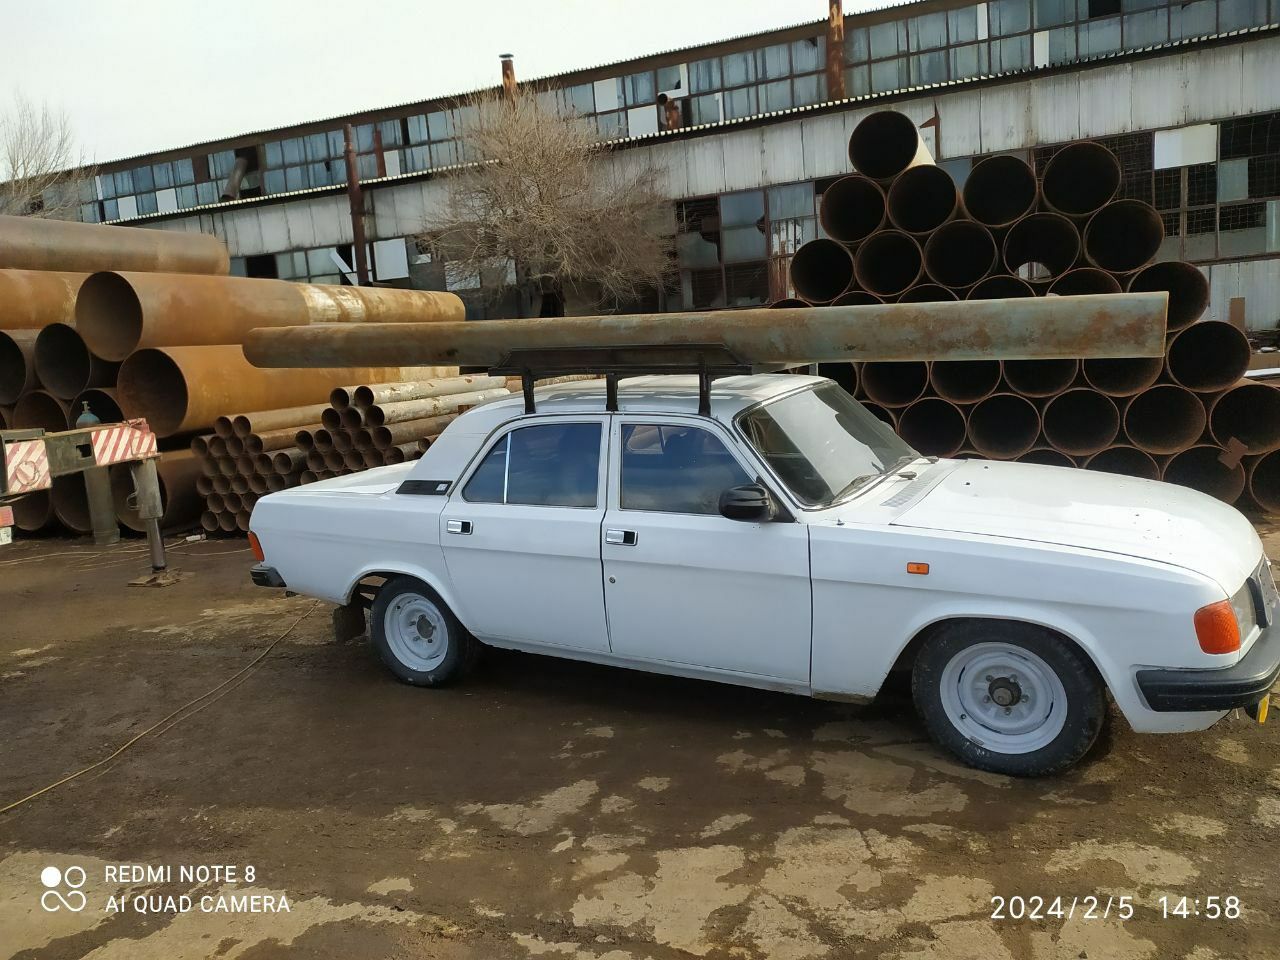 Volga 3129Propan gazi bor metan propanga ruhsati bor